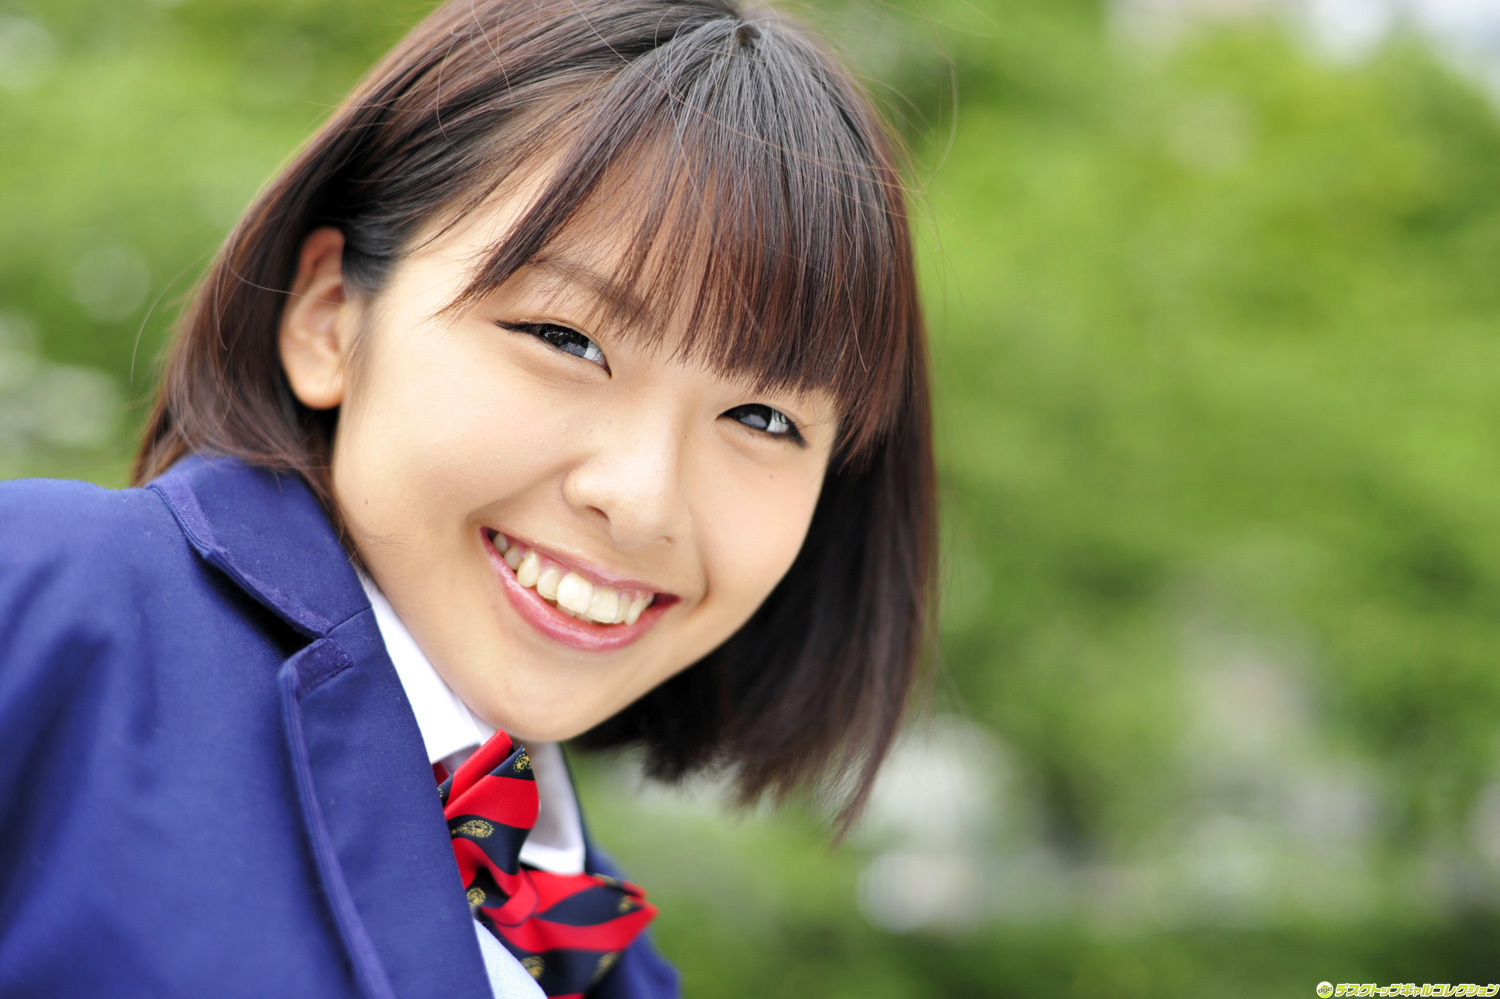 Uniform beautiful girl paradise - Sakai LAN Sakai [DGC] no.992 Japanese Beauty